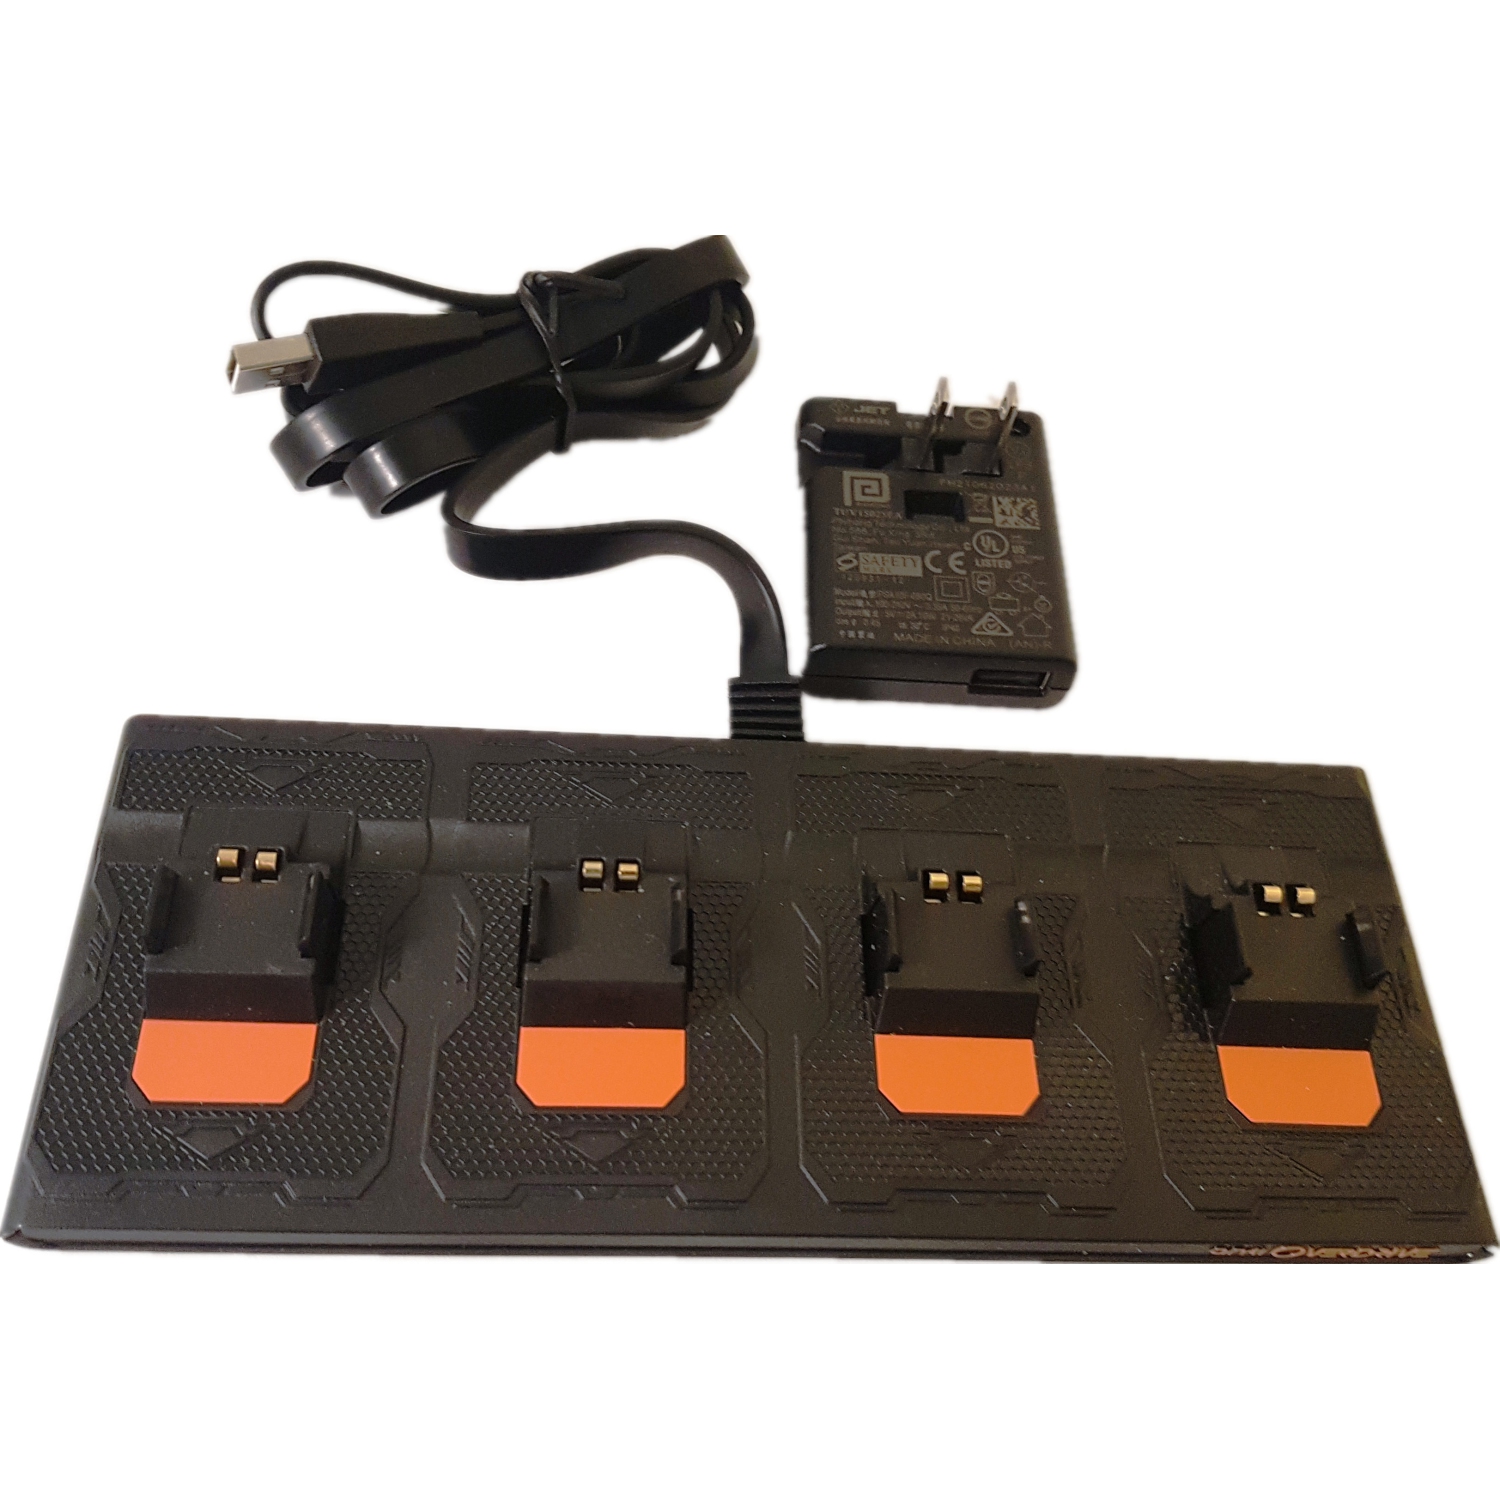 Anki Overdrive 4 Port car charger/charging station Pad USB RC- Refurbished